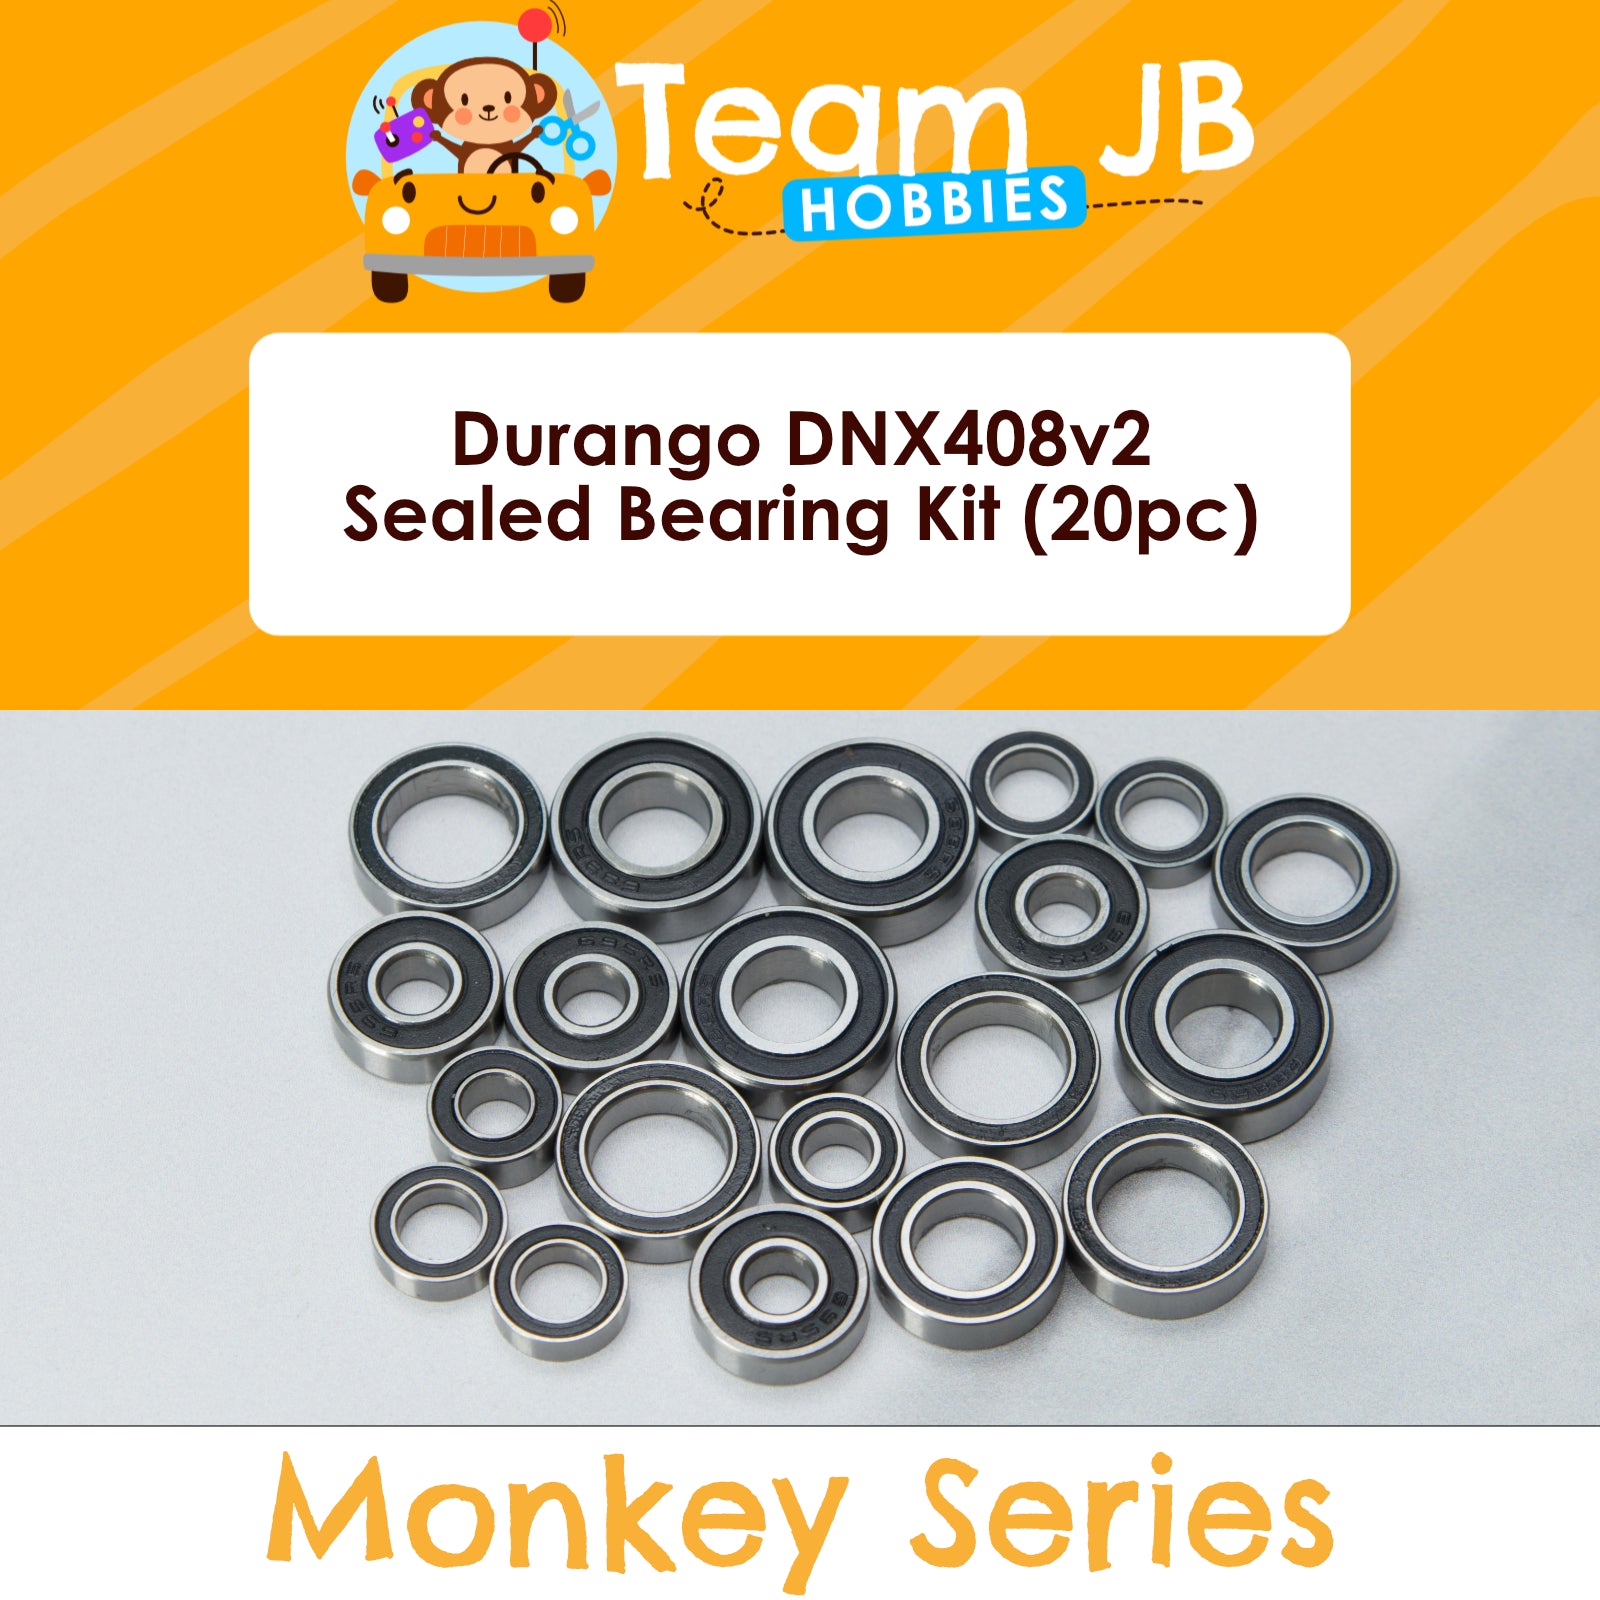 Durango DNX408v2 - Sealed Bearing Kit